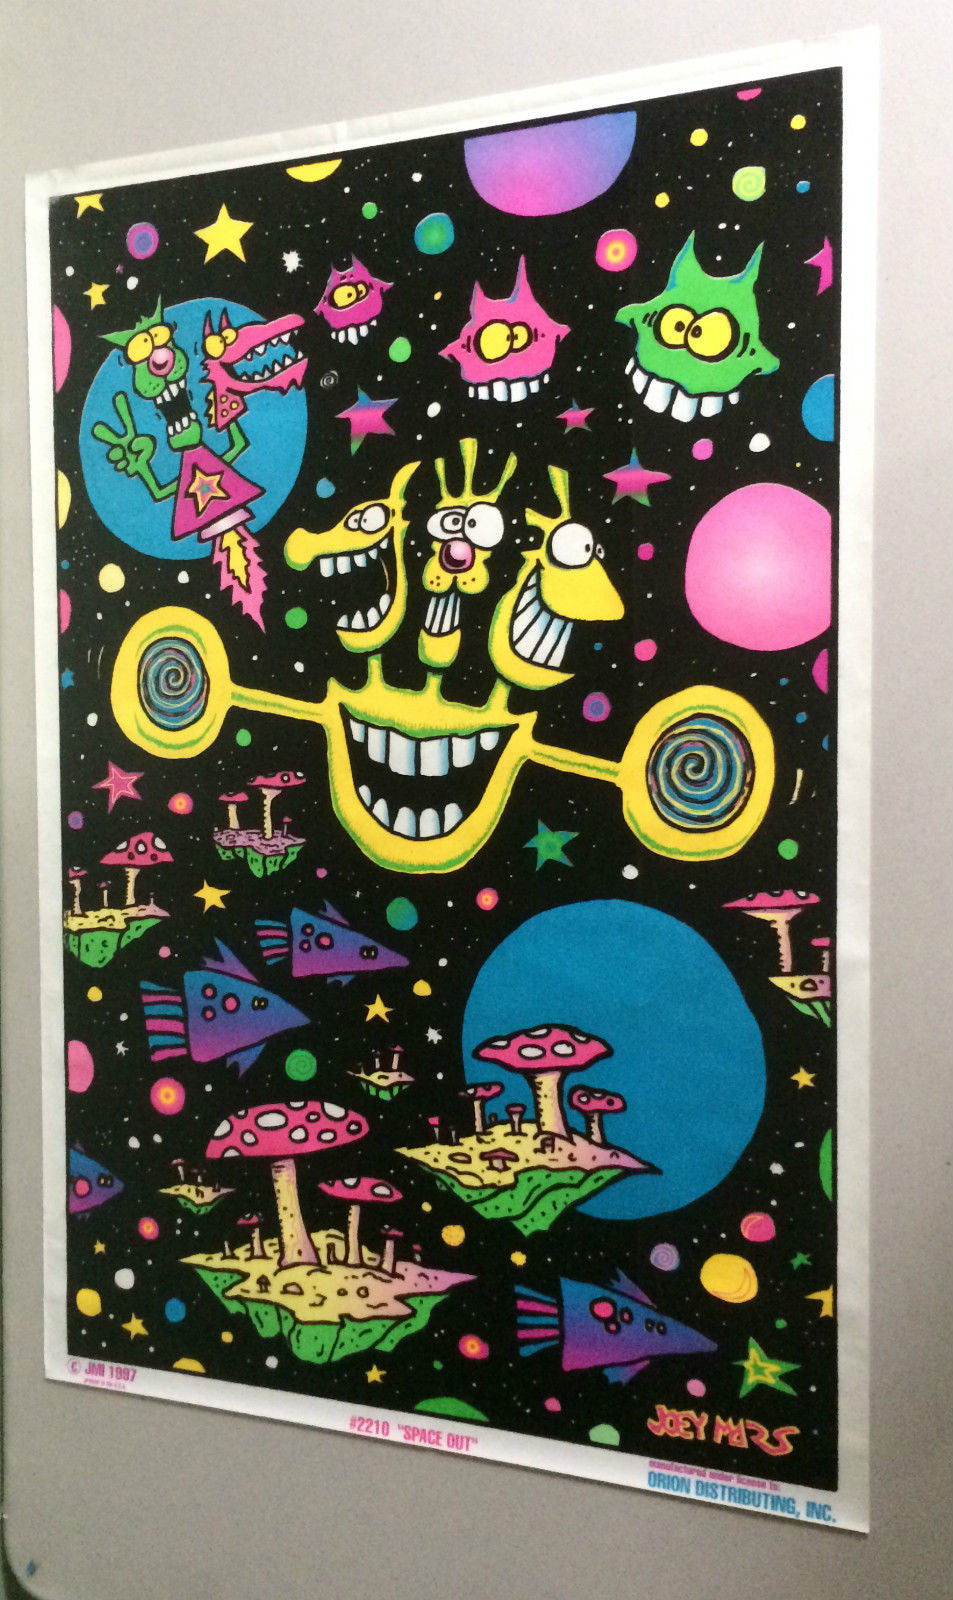 Felt Black Light Poster - 1997 - Joey Mars Space Out